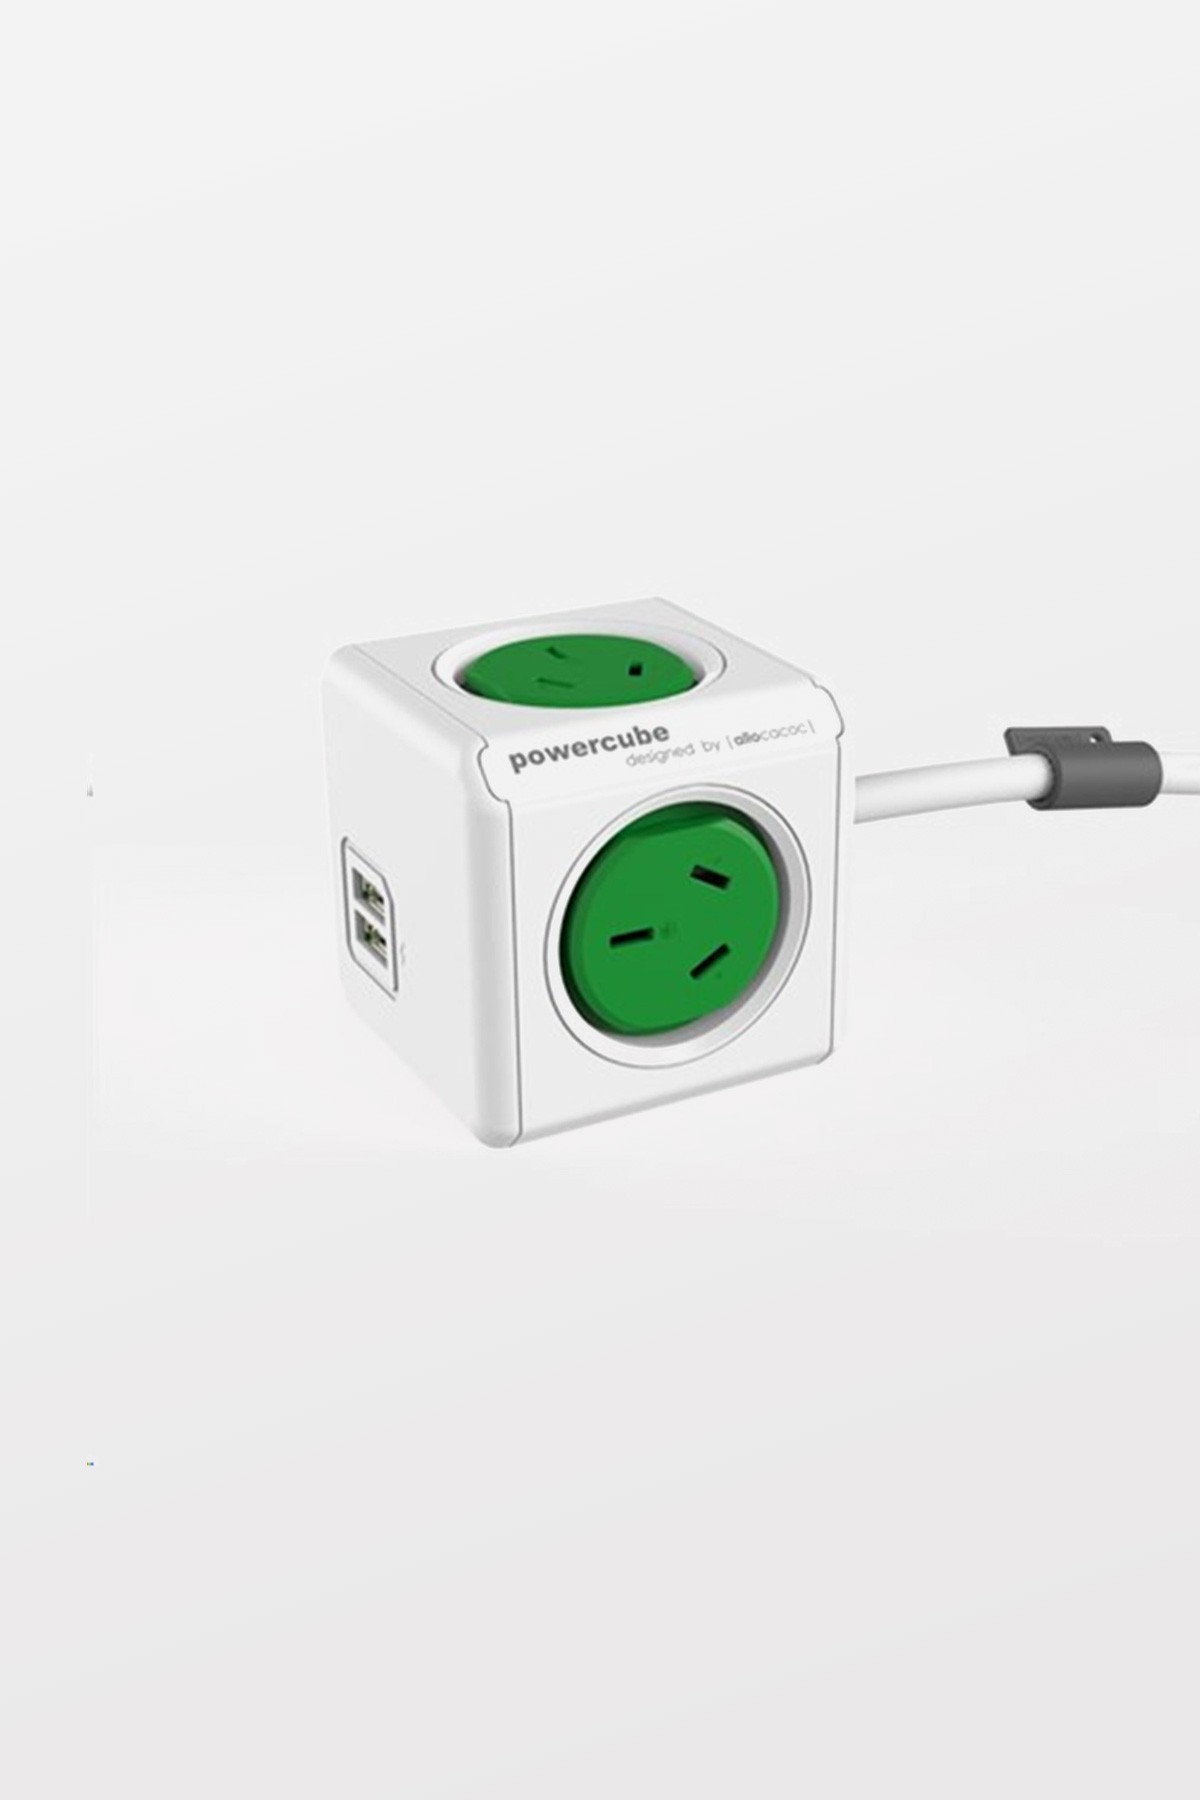 Powercube Extended USB - Green